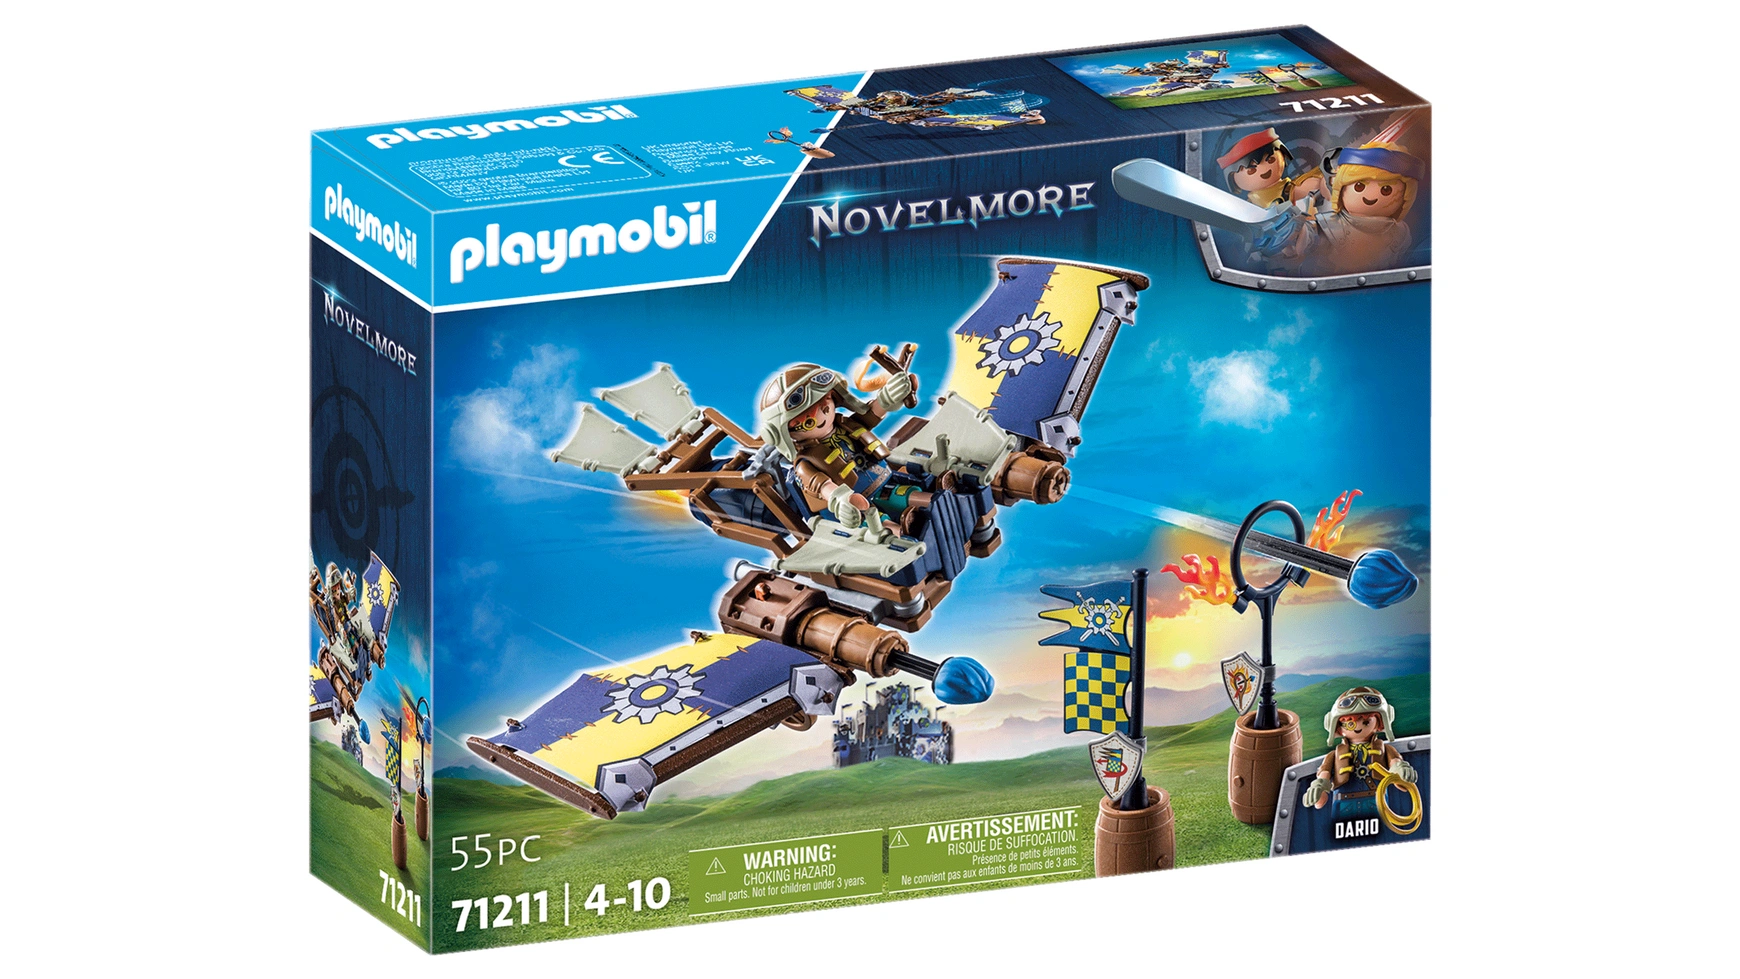 Novelmore планер дарио Playmobil novelmore засада на обочине дороги playmobil